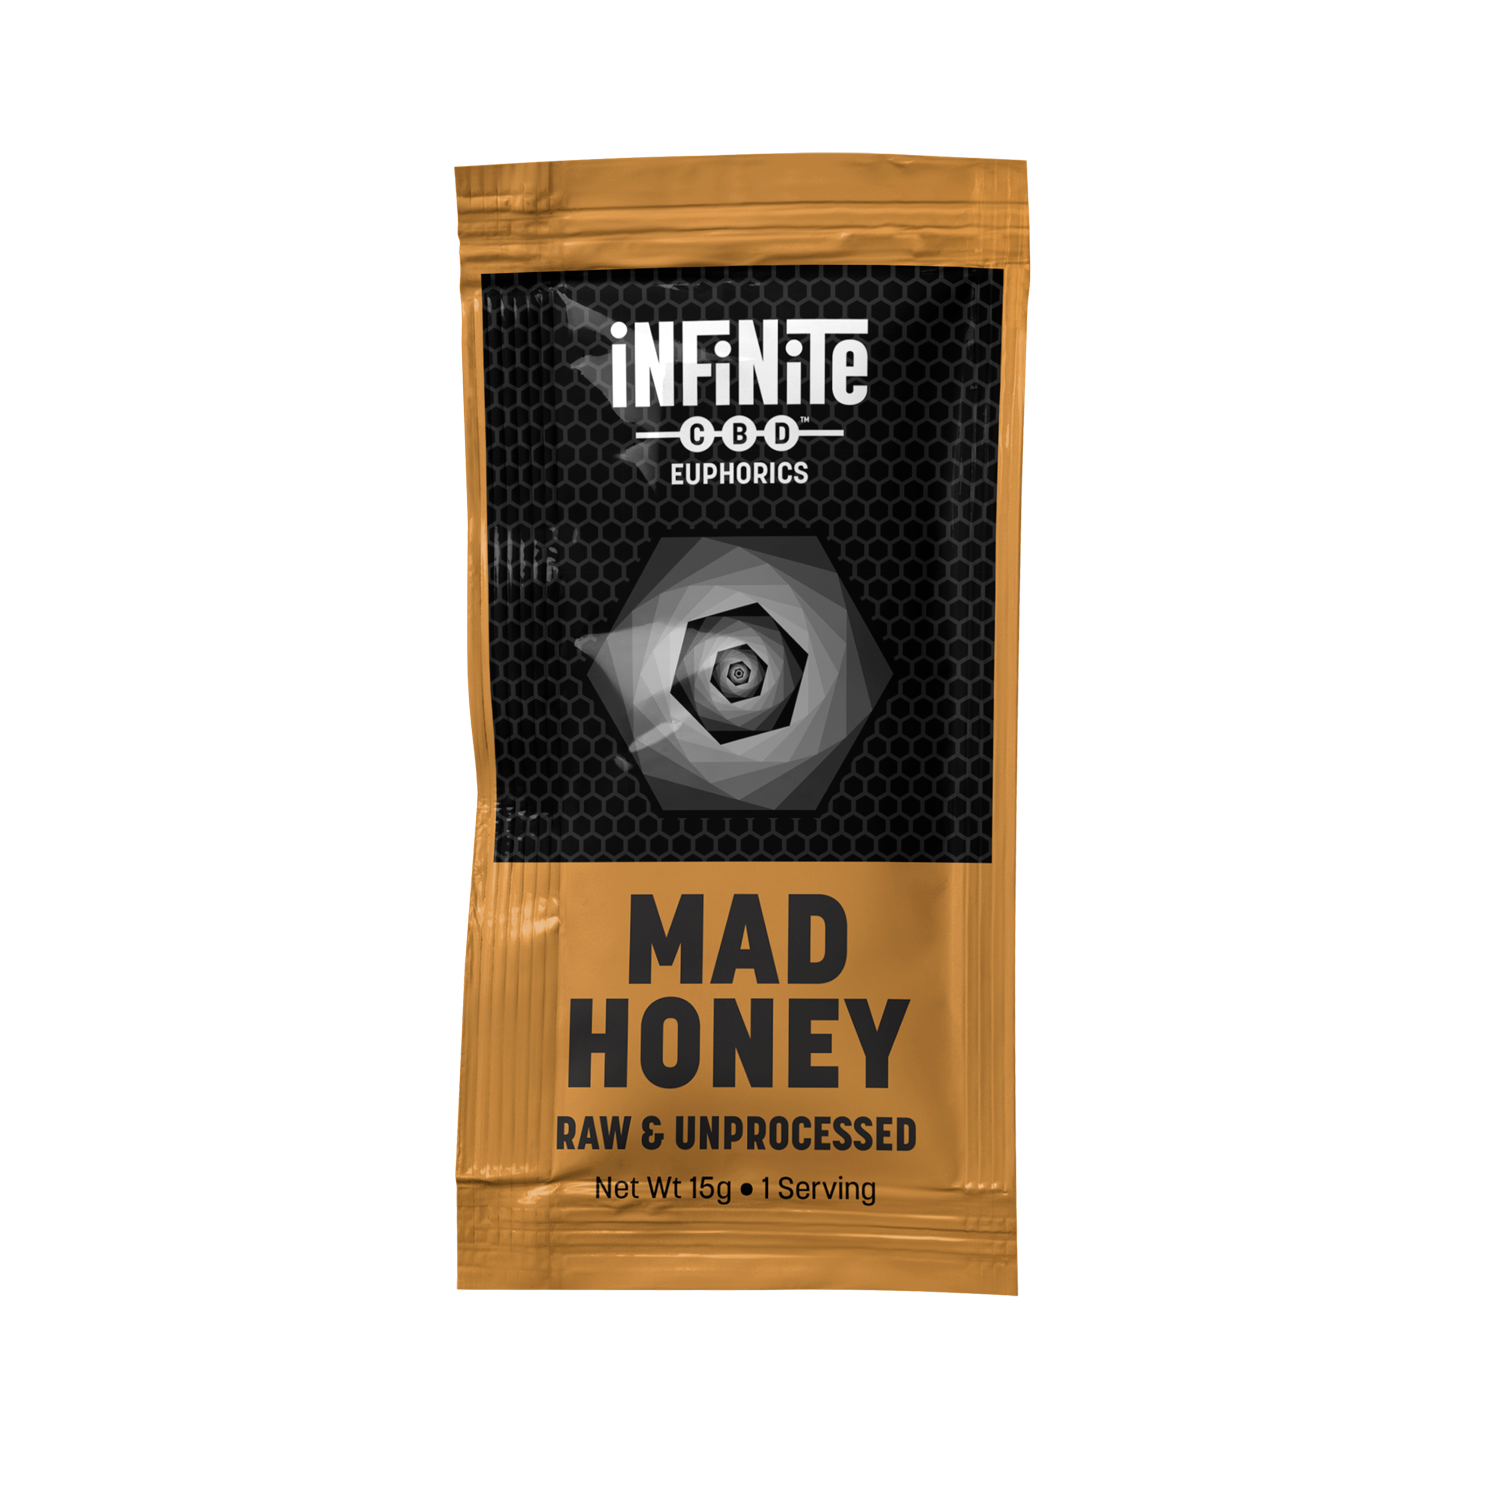 Mad Honey Packet